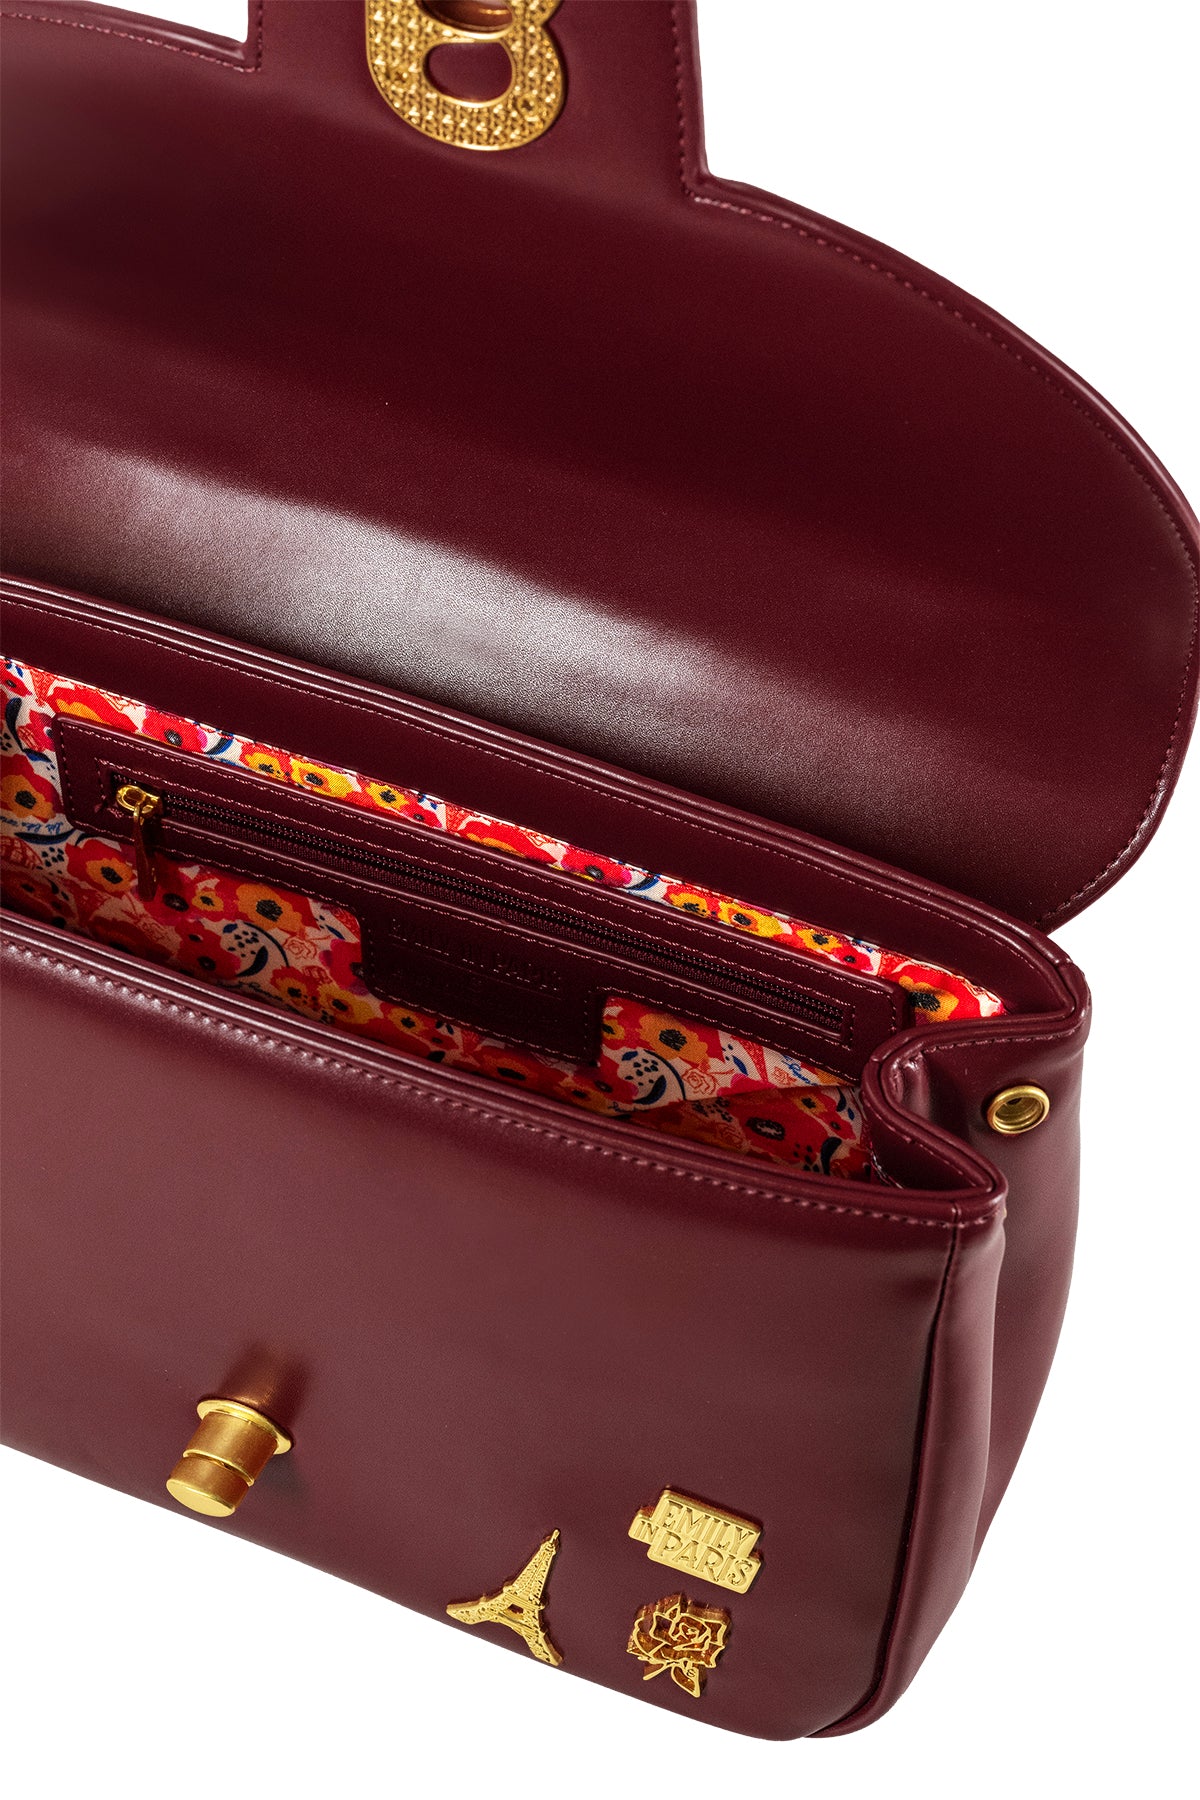 Emily Alma Flap Bag Medium - Le Rouge